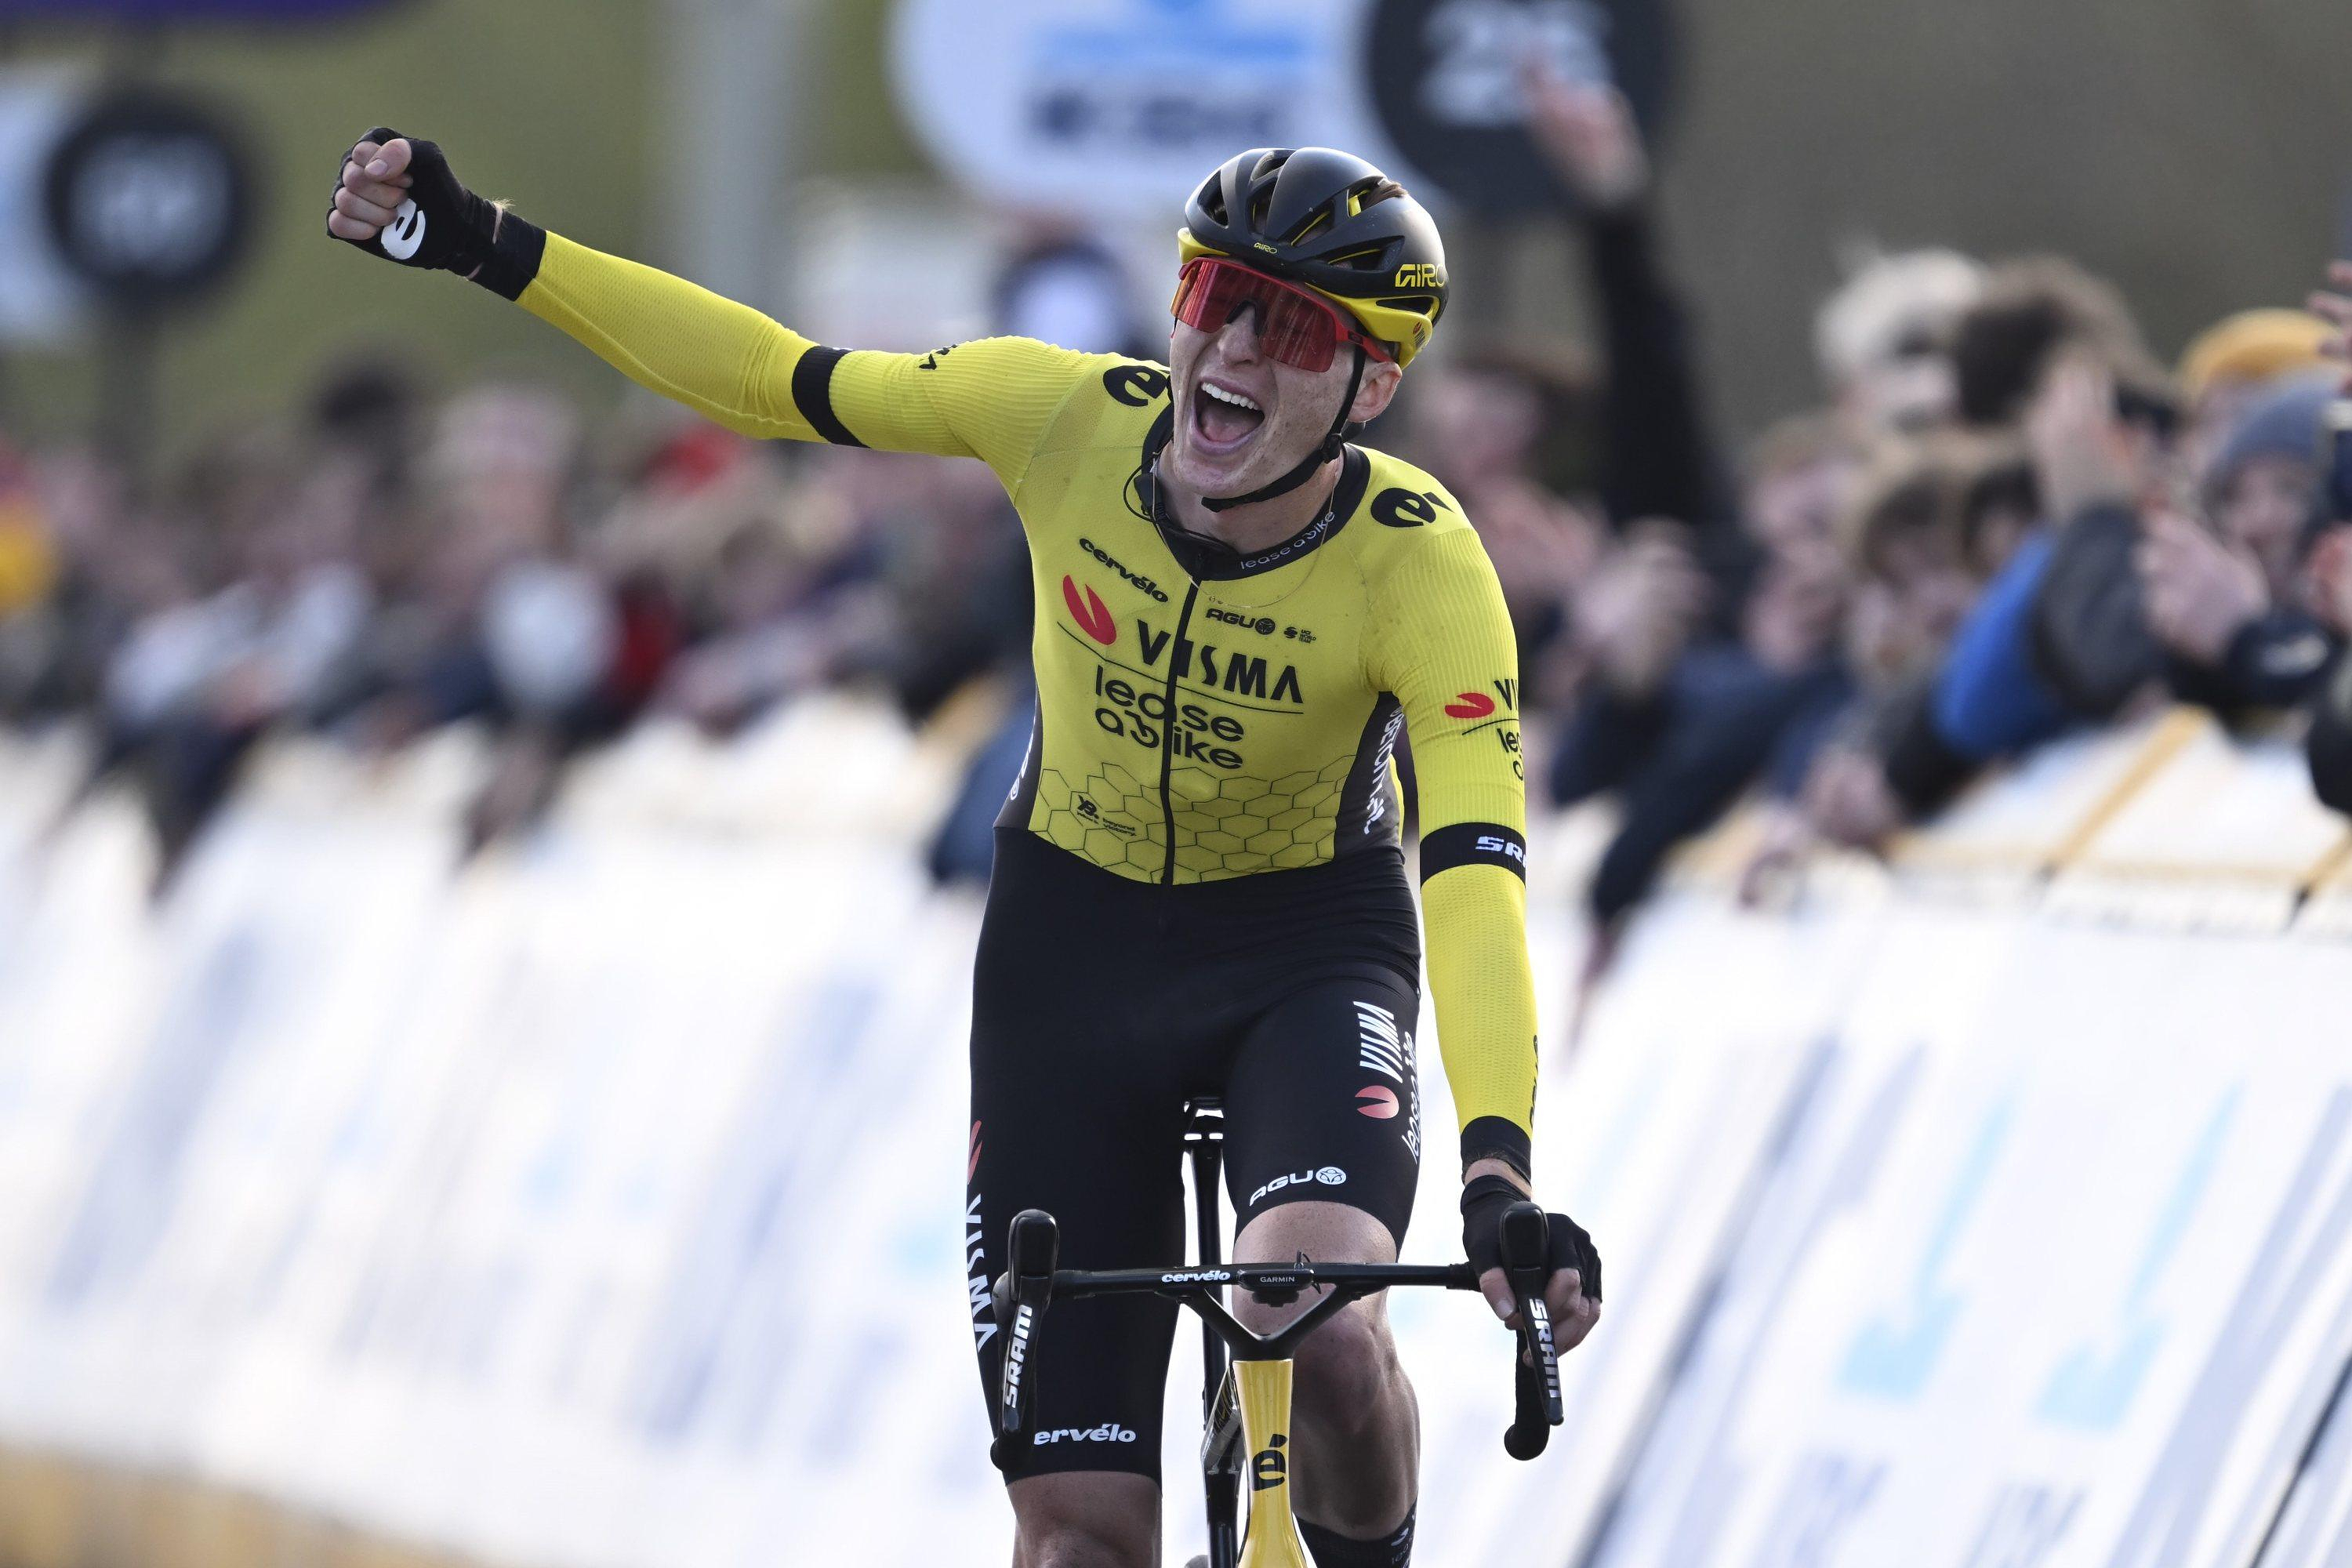 Cycling: Jorgenson winner of Across Flanders after Van Aert’s fall